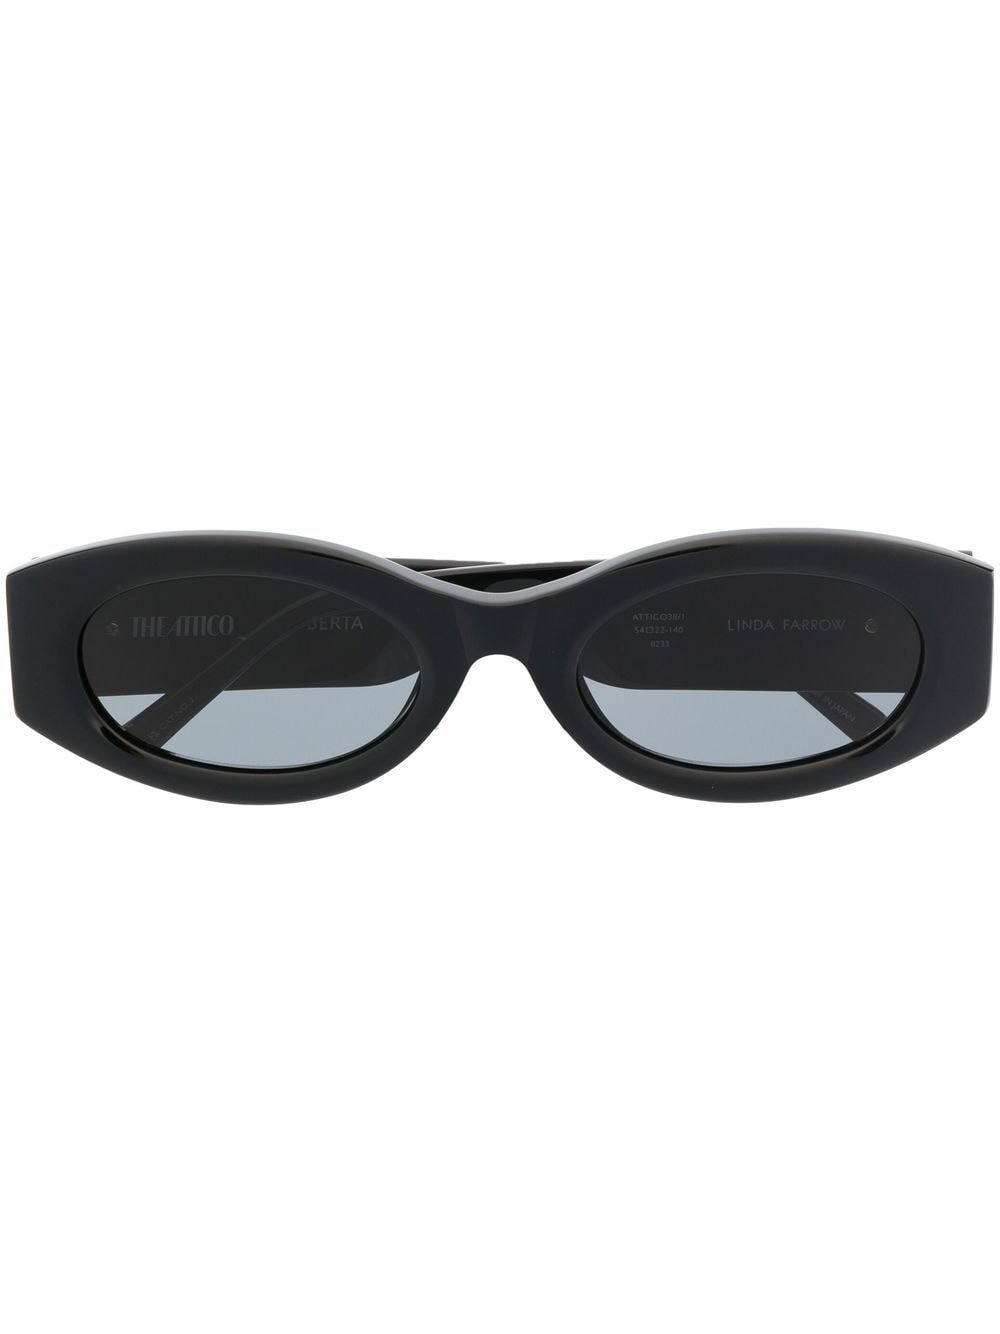 Image 1 of Linda Farrow round frame sunglasses